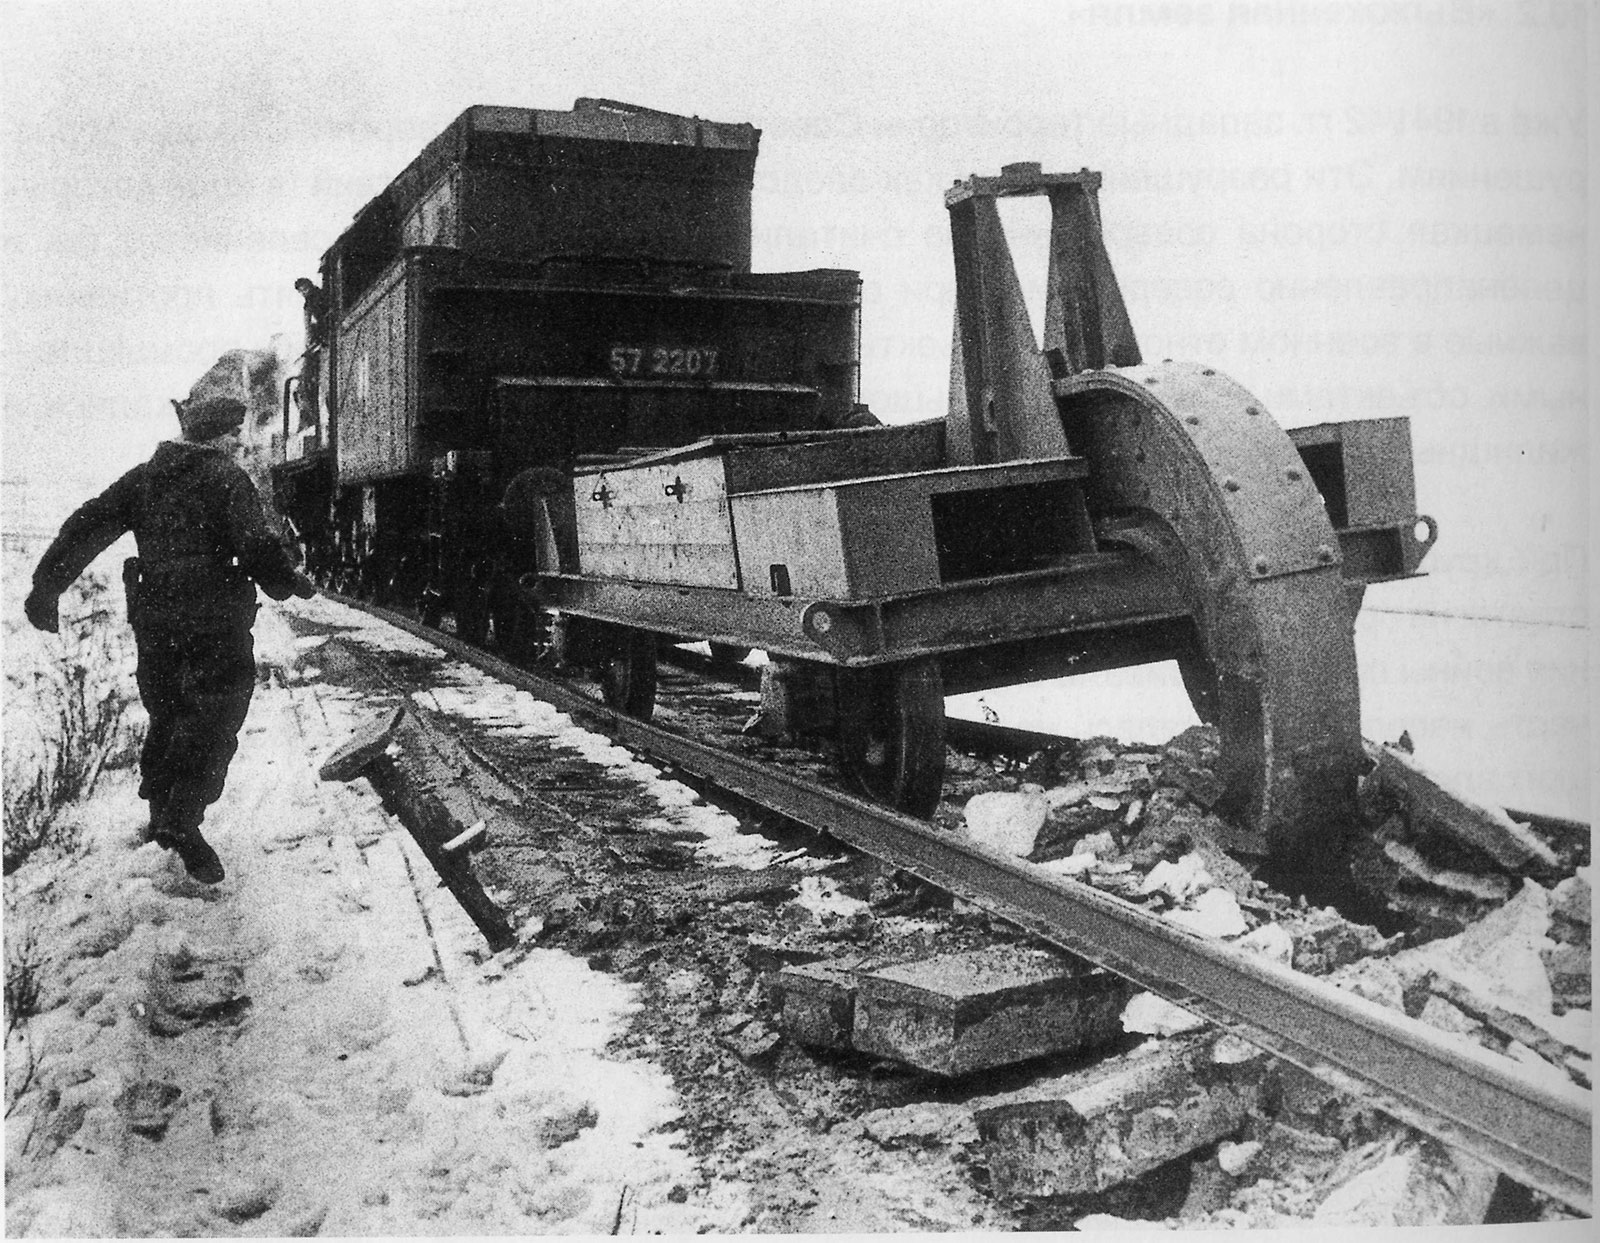 A railroad plough, also known as a Schienenwolf, "rail wolf", destroys Soviet train tracks as the Germans retreat. Winter 1943